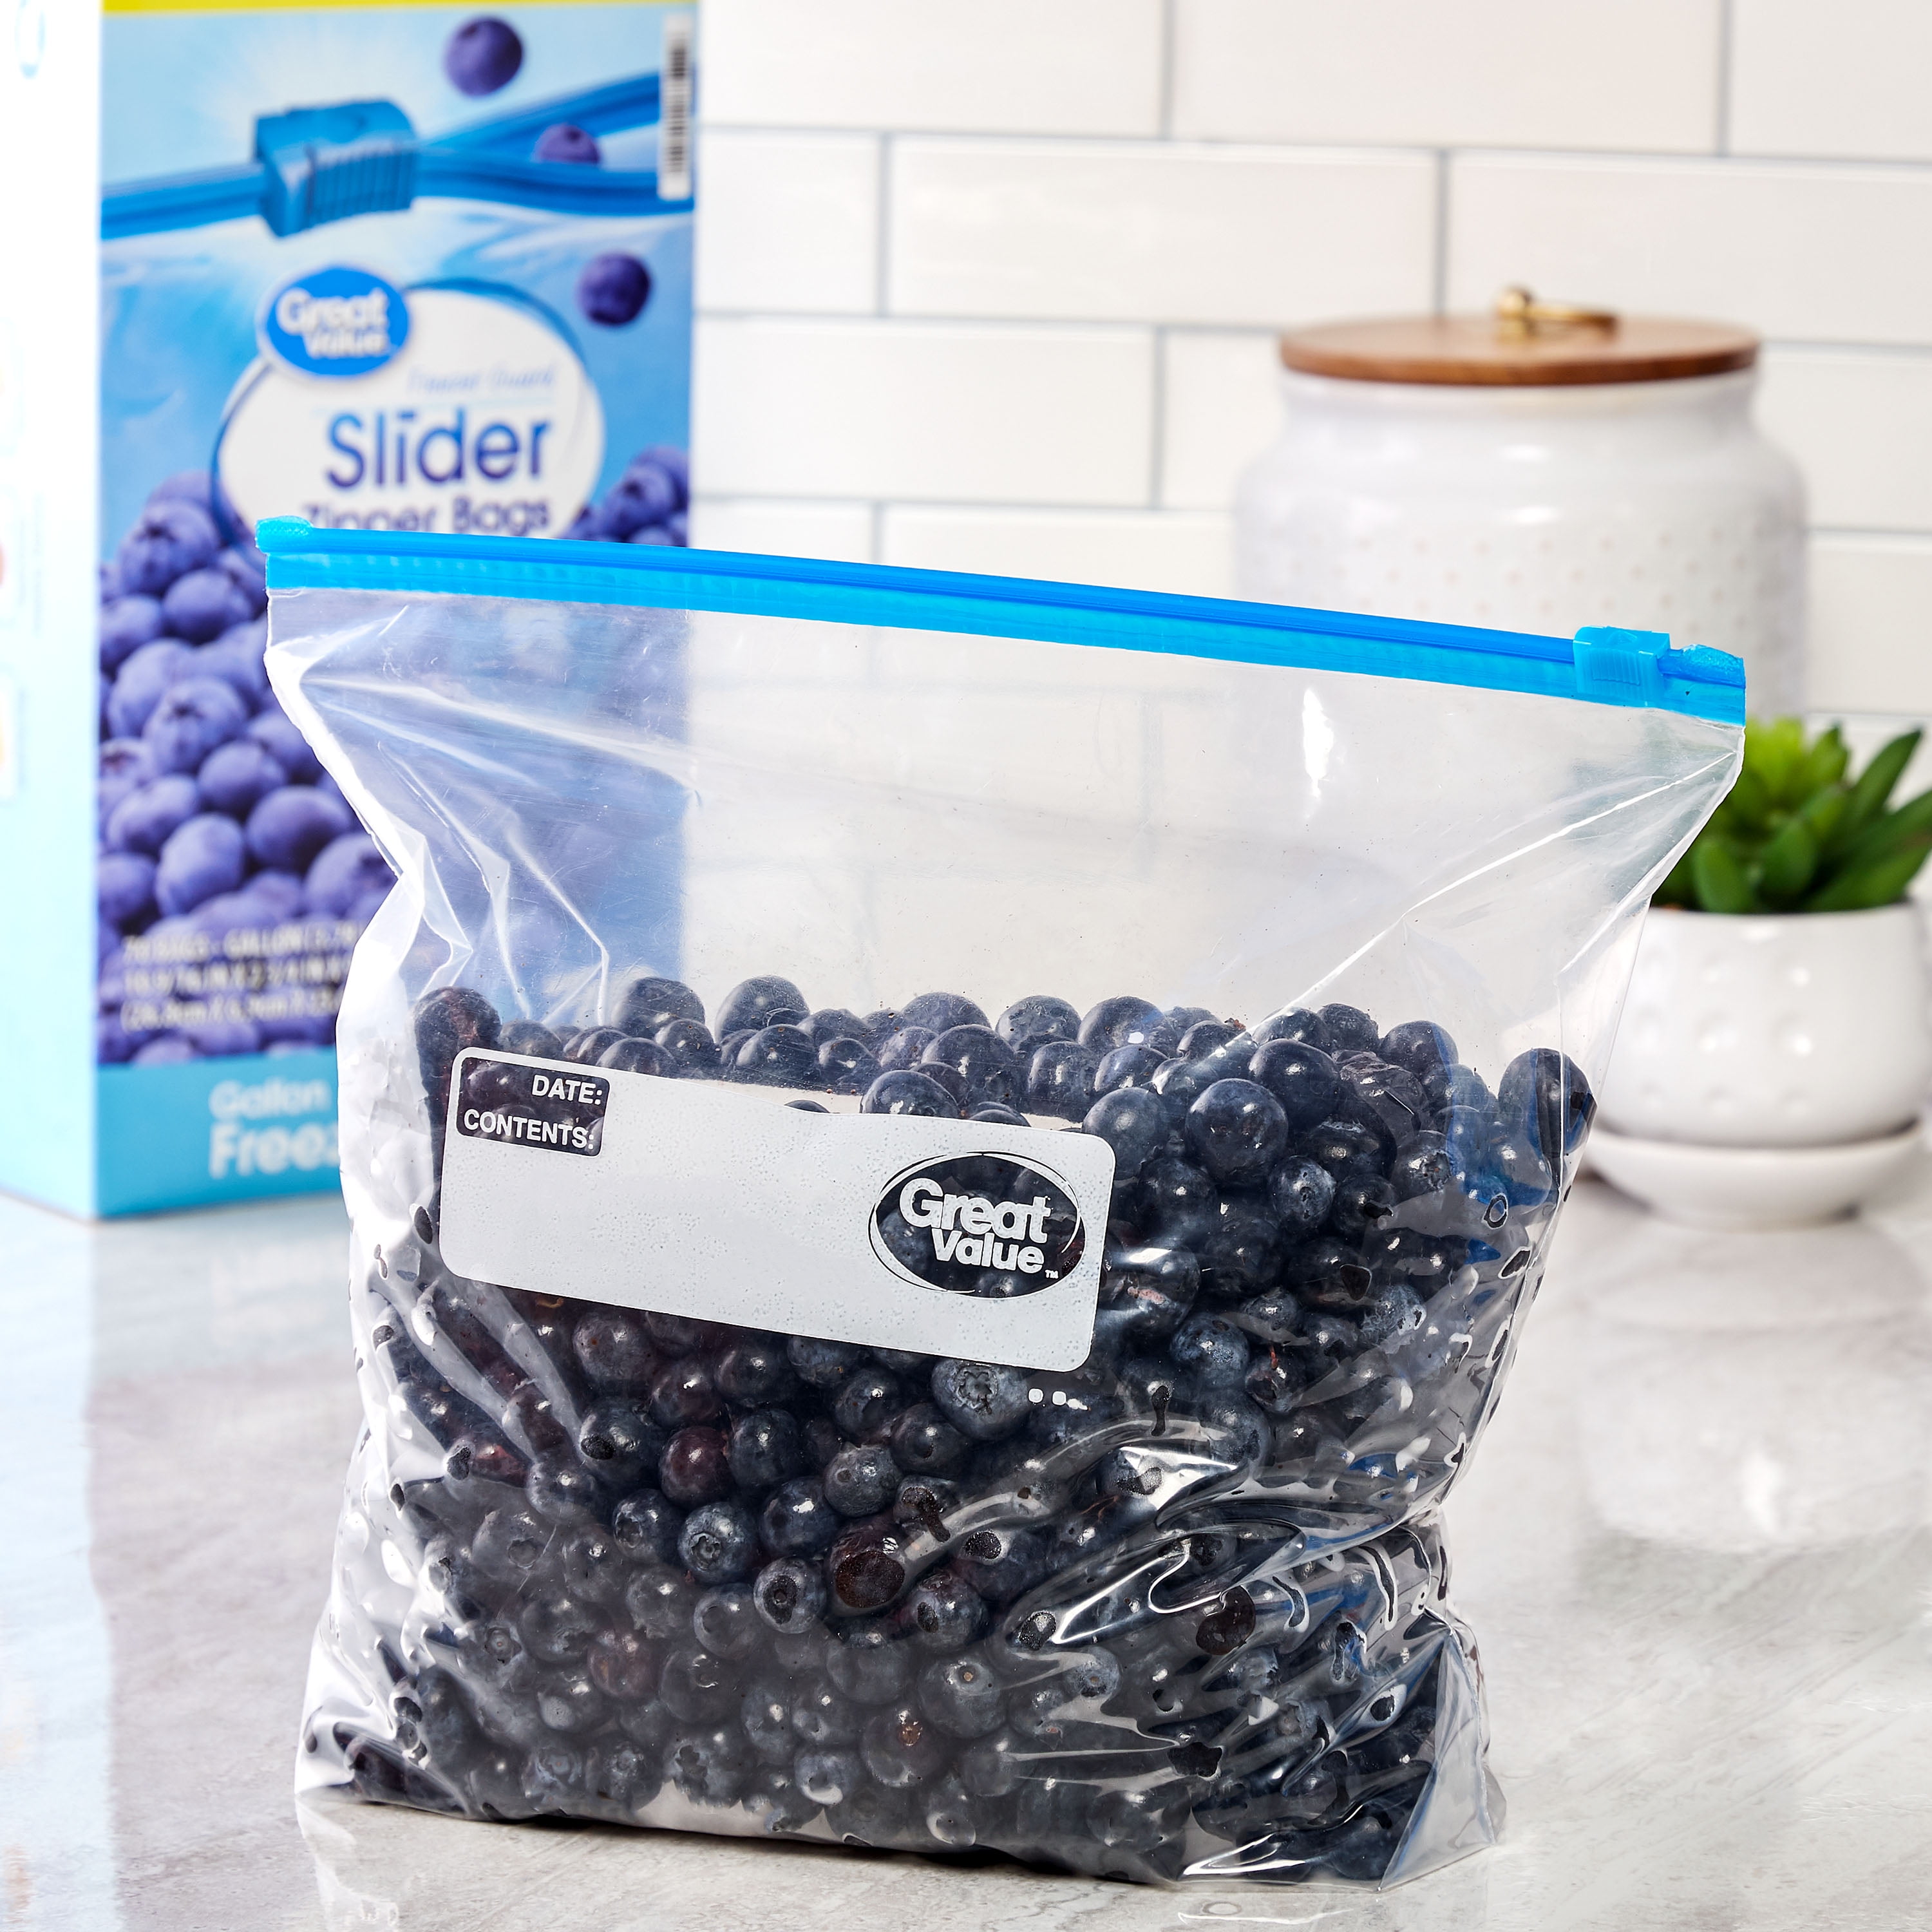 Ziploc Slider Gallon Freezer Storage Bags, 10 ct - Fred Meyer